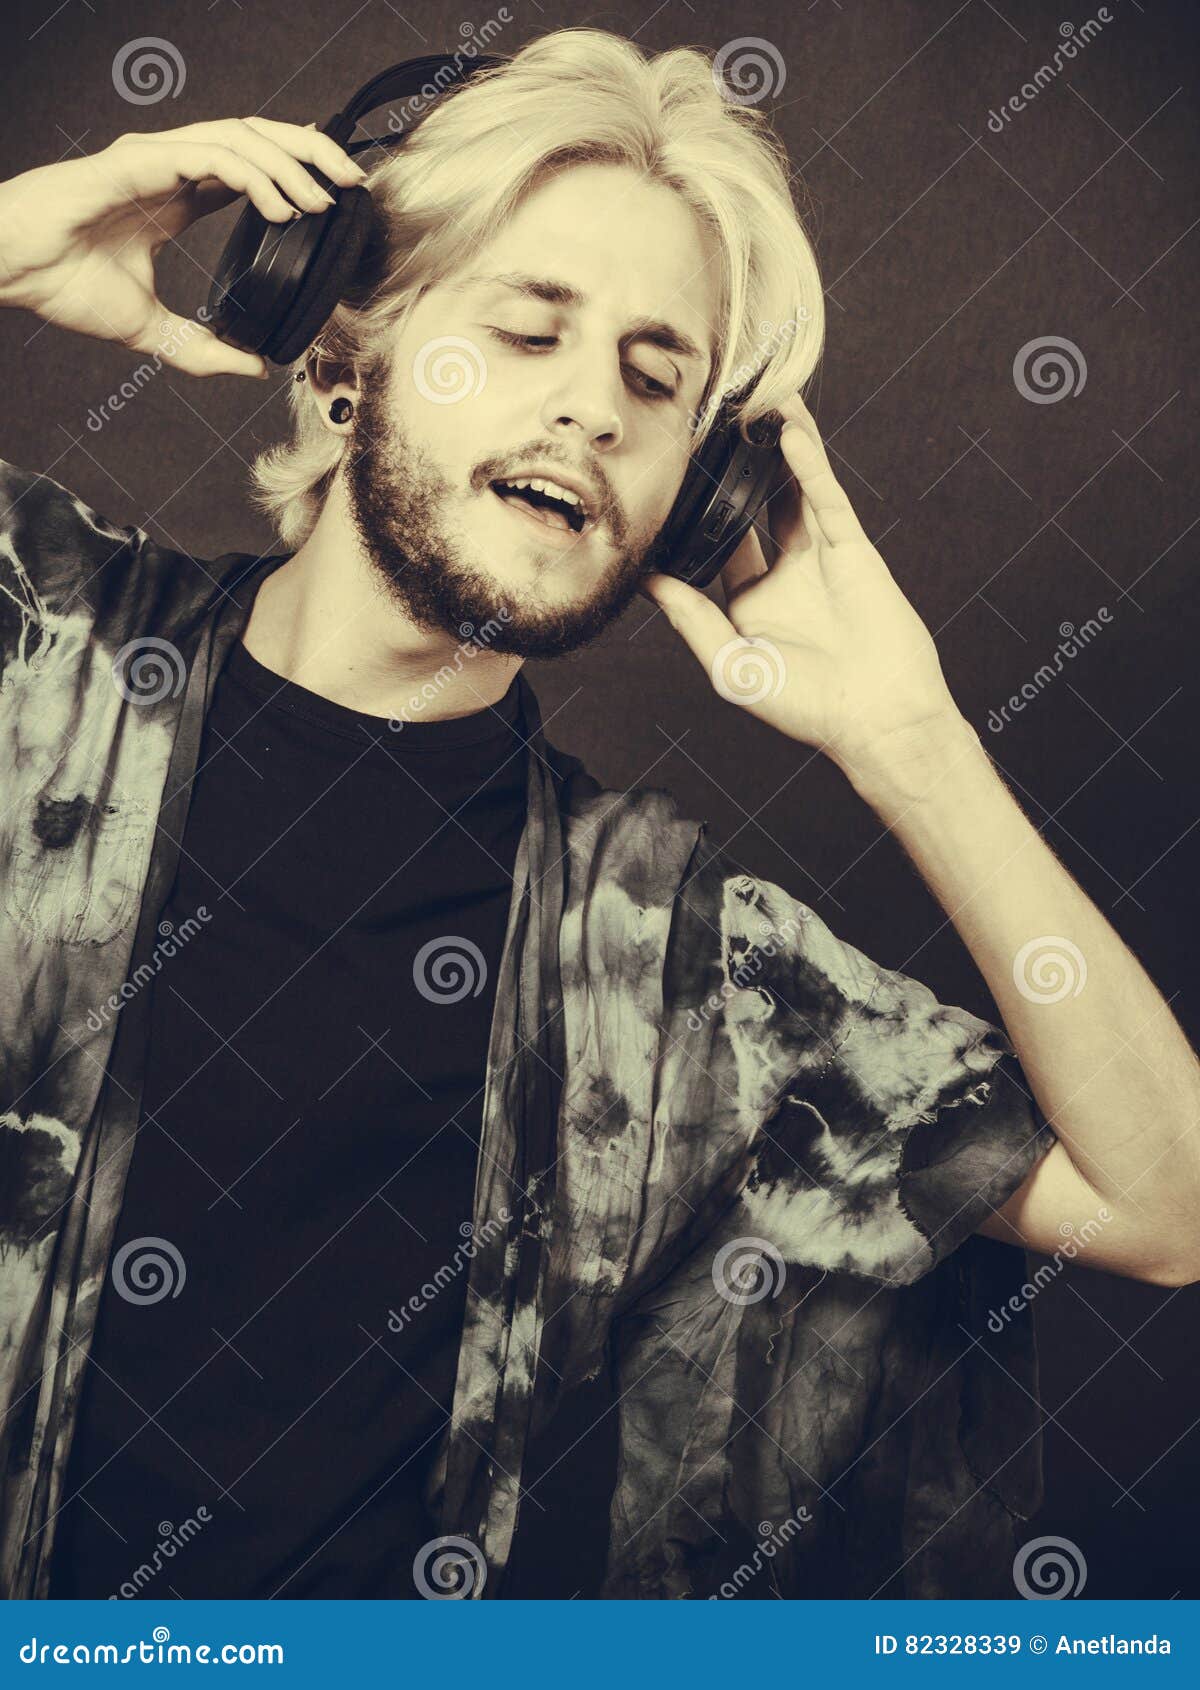 Blonde Man Singing in Studio Wearing Headphones Stock Image - Image of  artistic, audio: 82328339